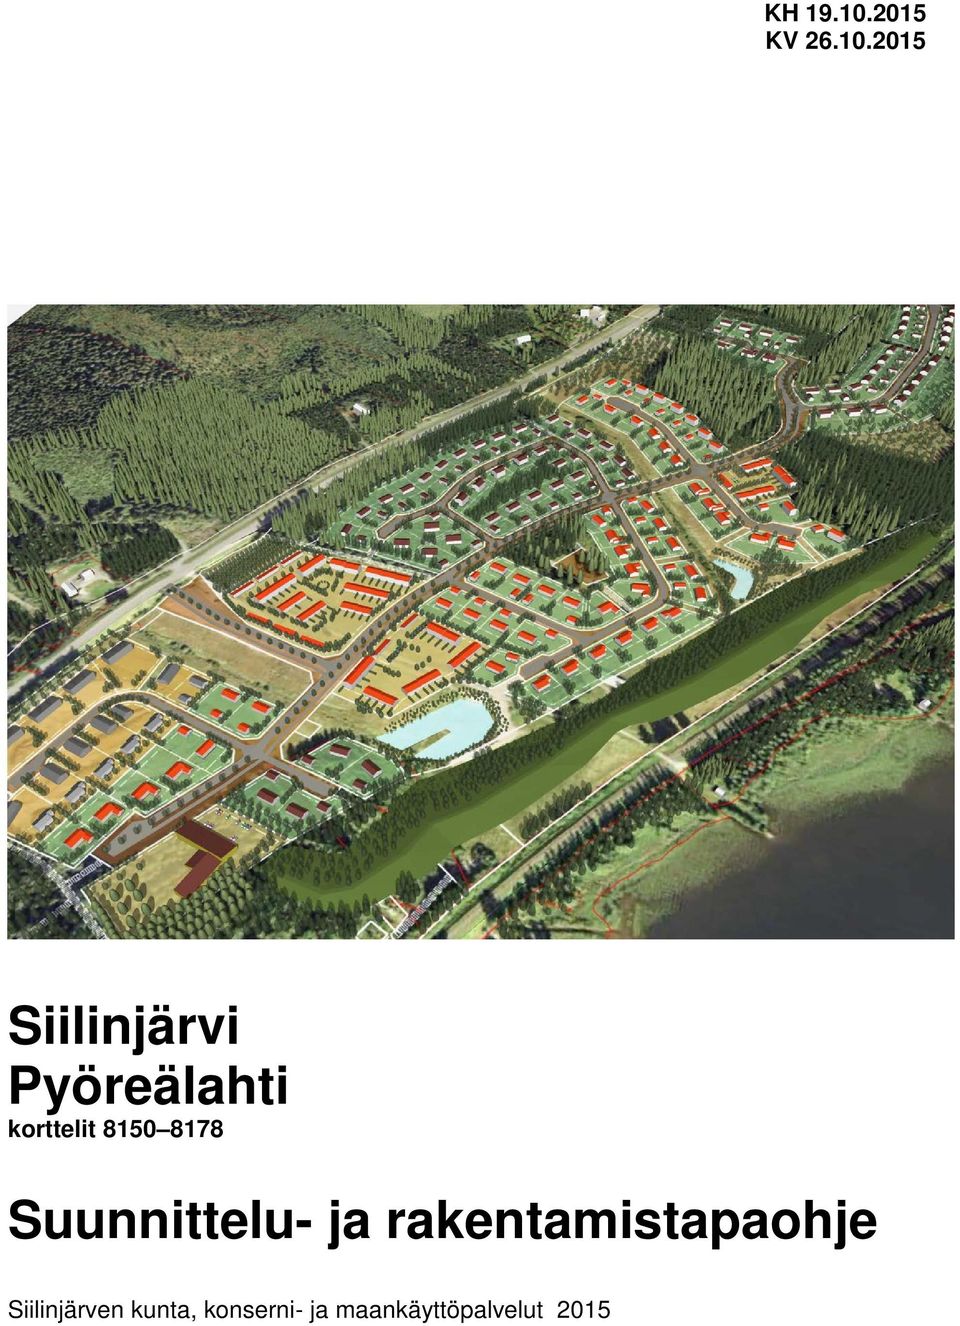 2015 Siilinjärvi Pyöreälahti korttelit